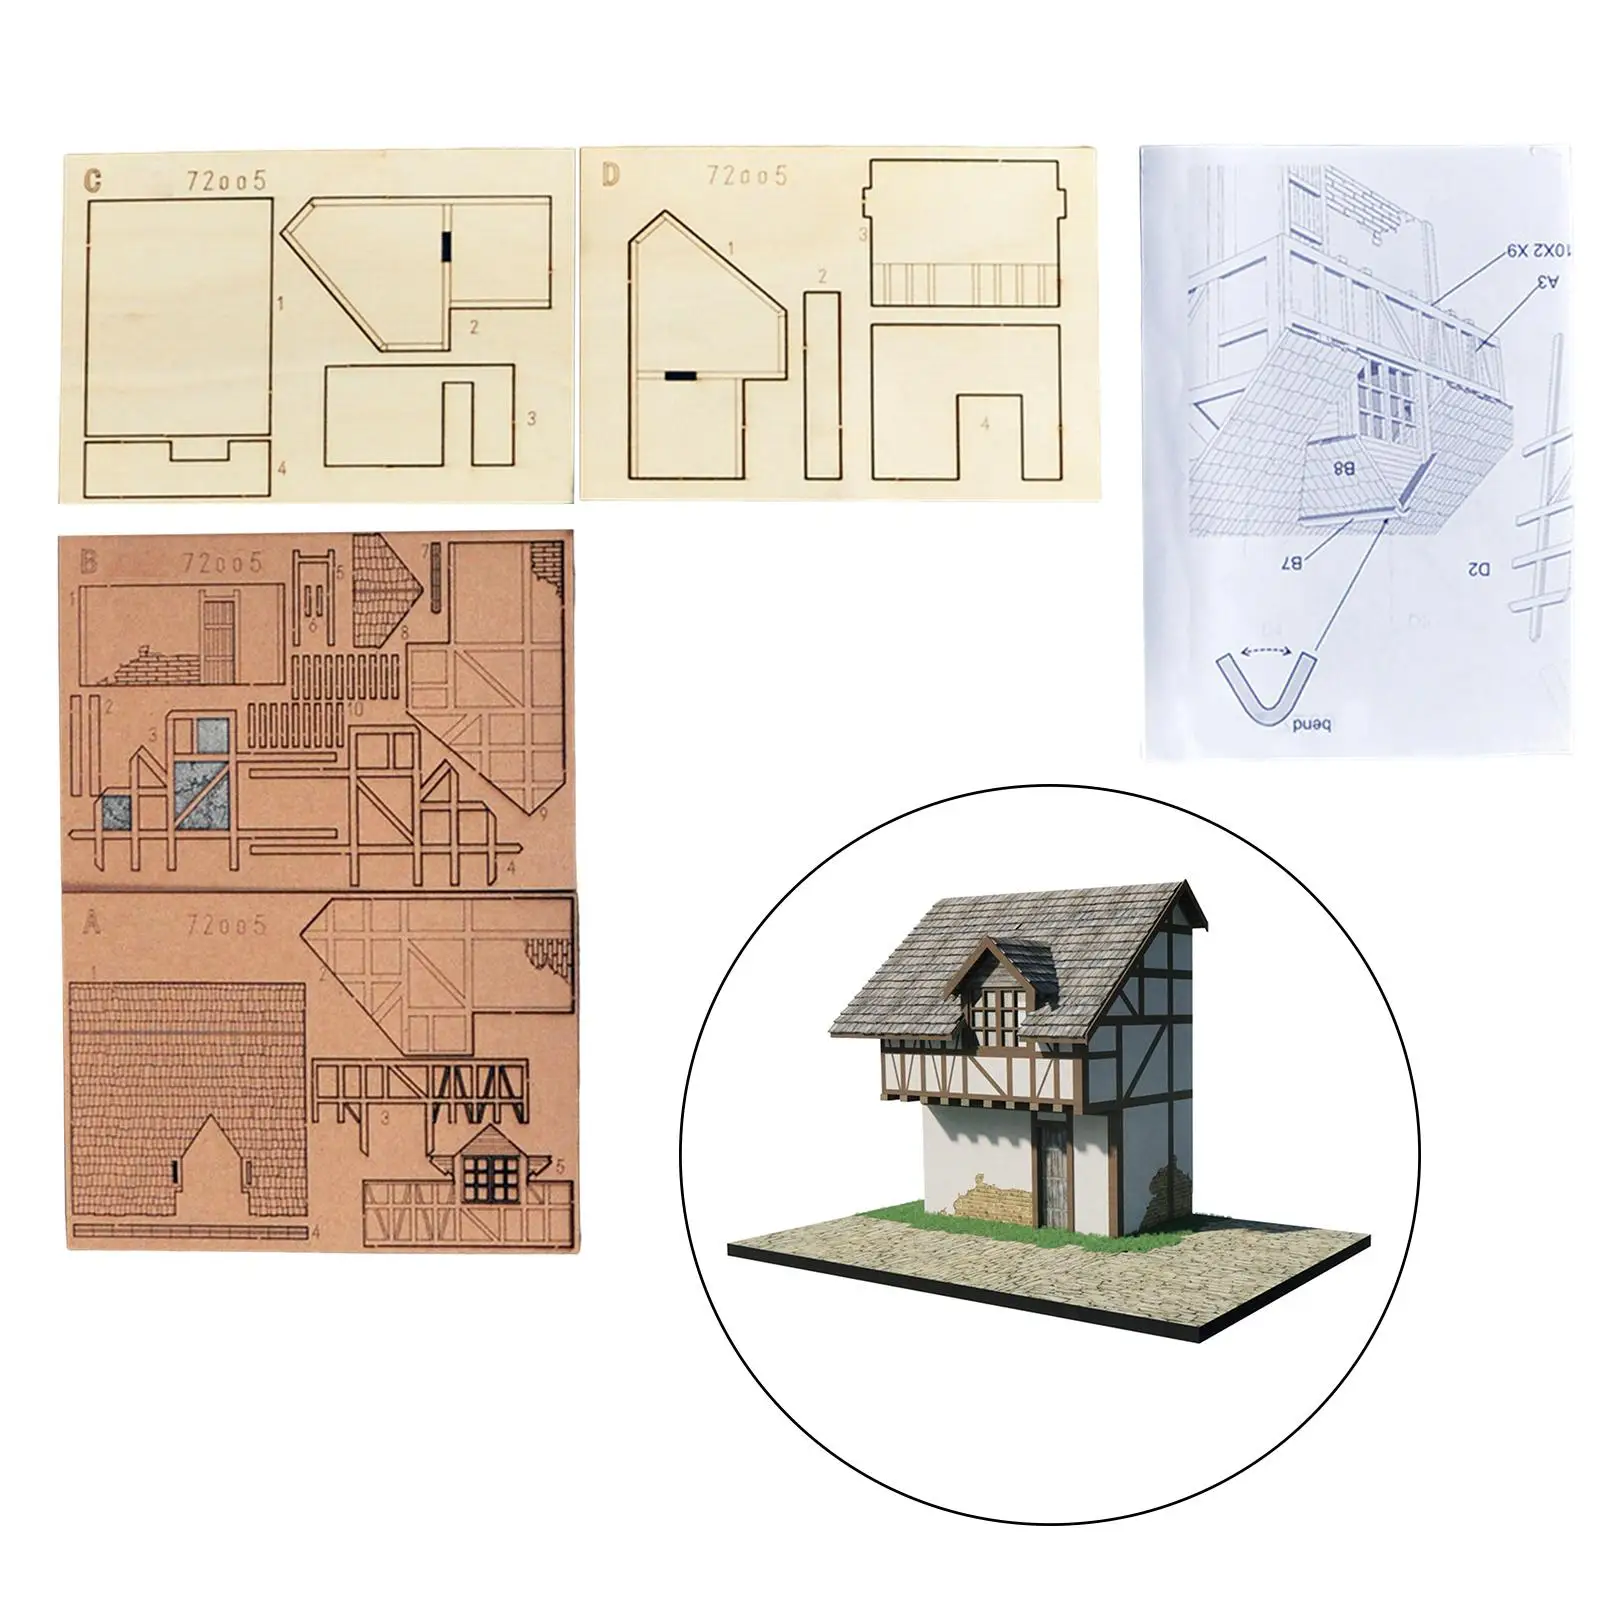 1/72 Handmade Miniature House Wooden Puzzle Ruins Architecture Scene for Diorama Architecture Model Layout Micro Landscape Decor